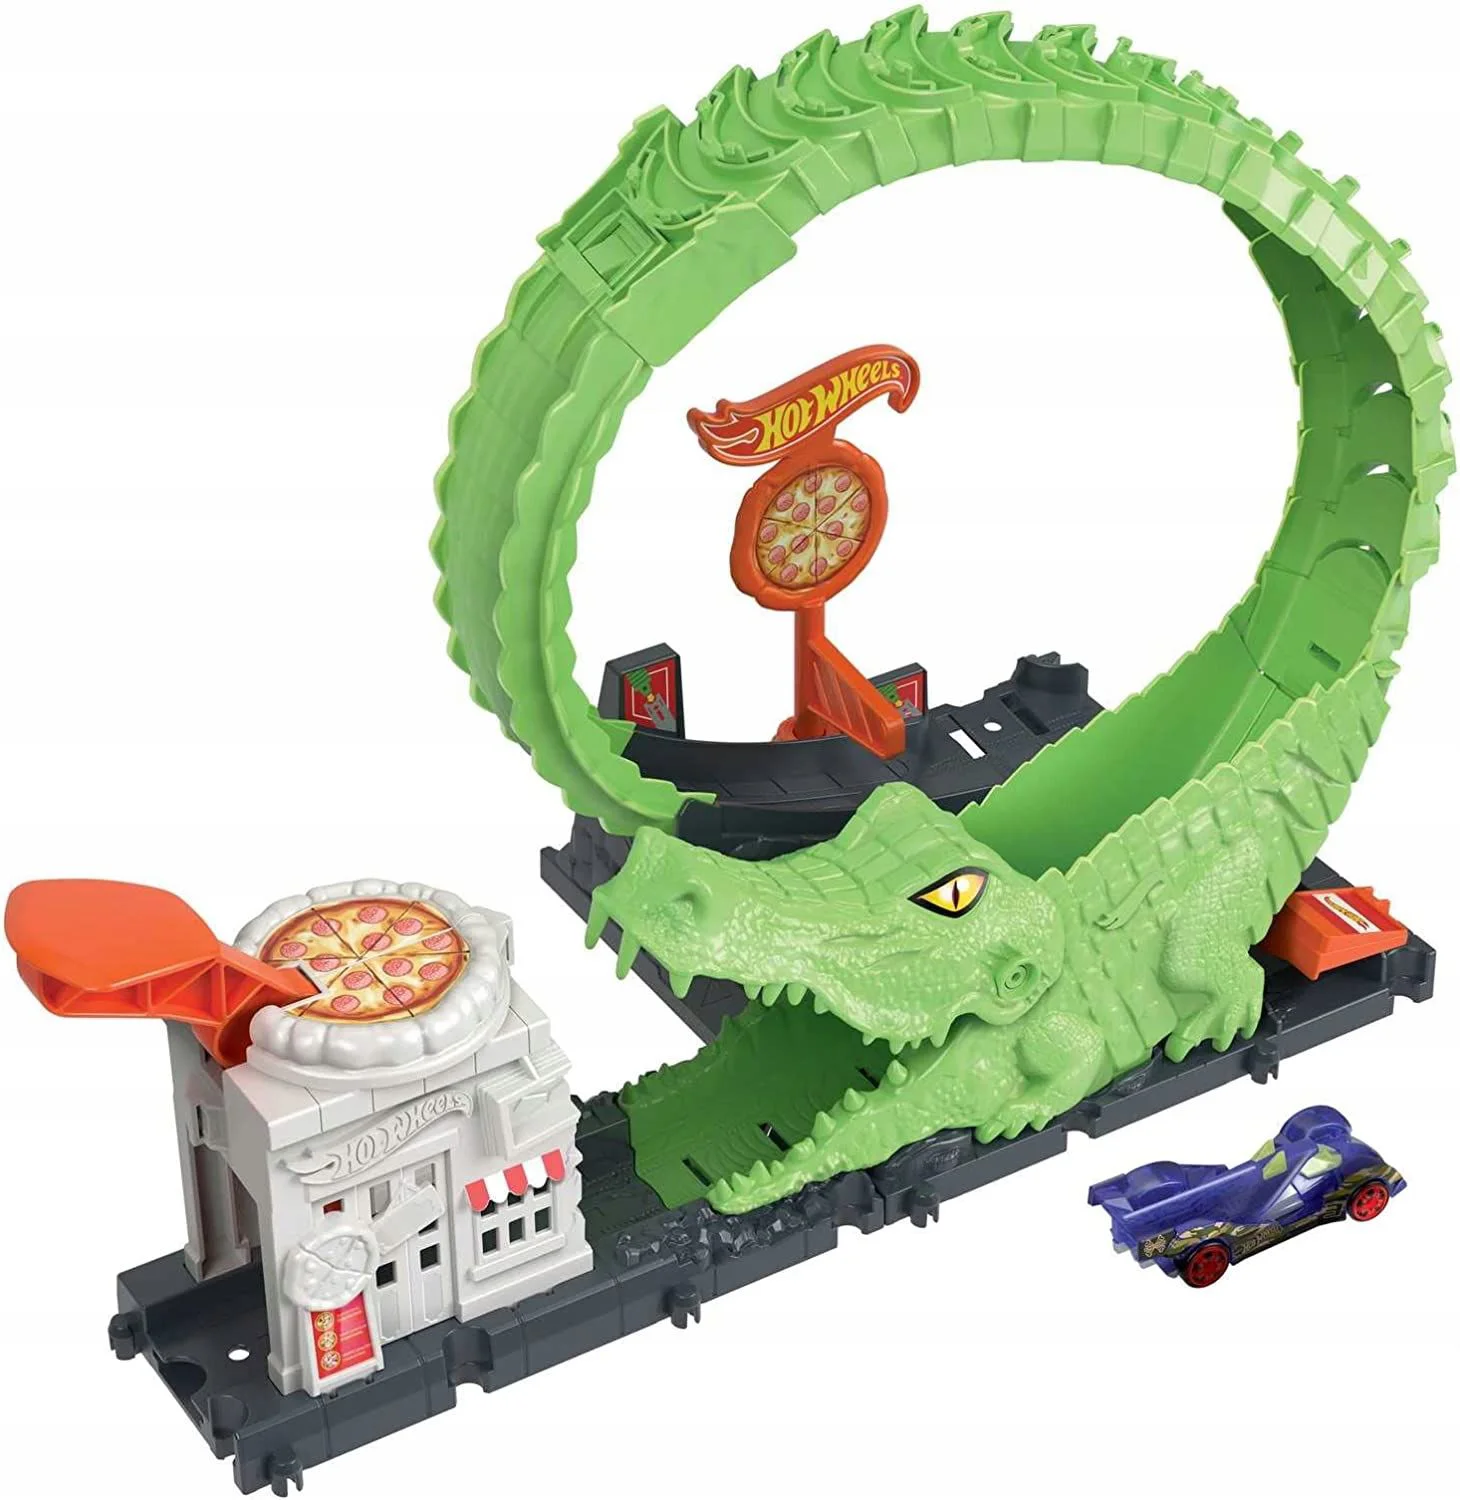 Set de joaca Hot Wheels Capcana crocodilului